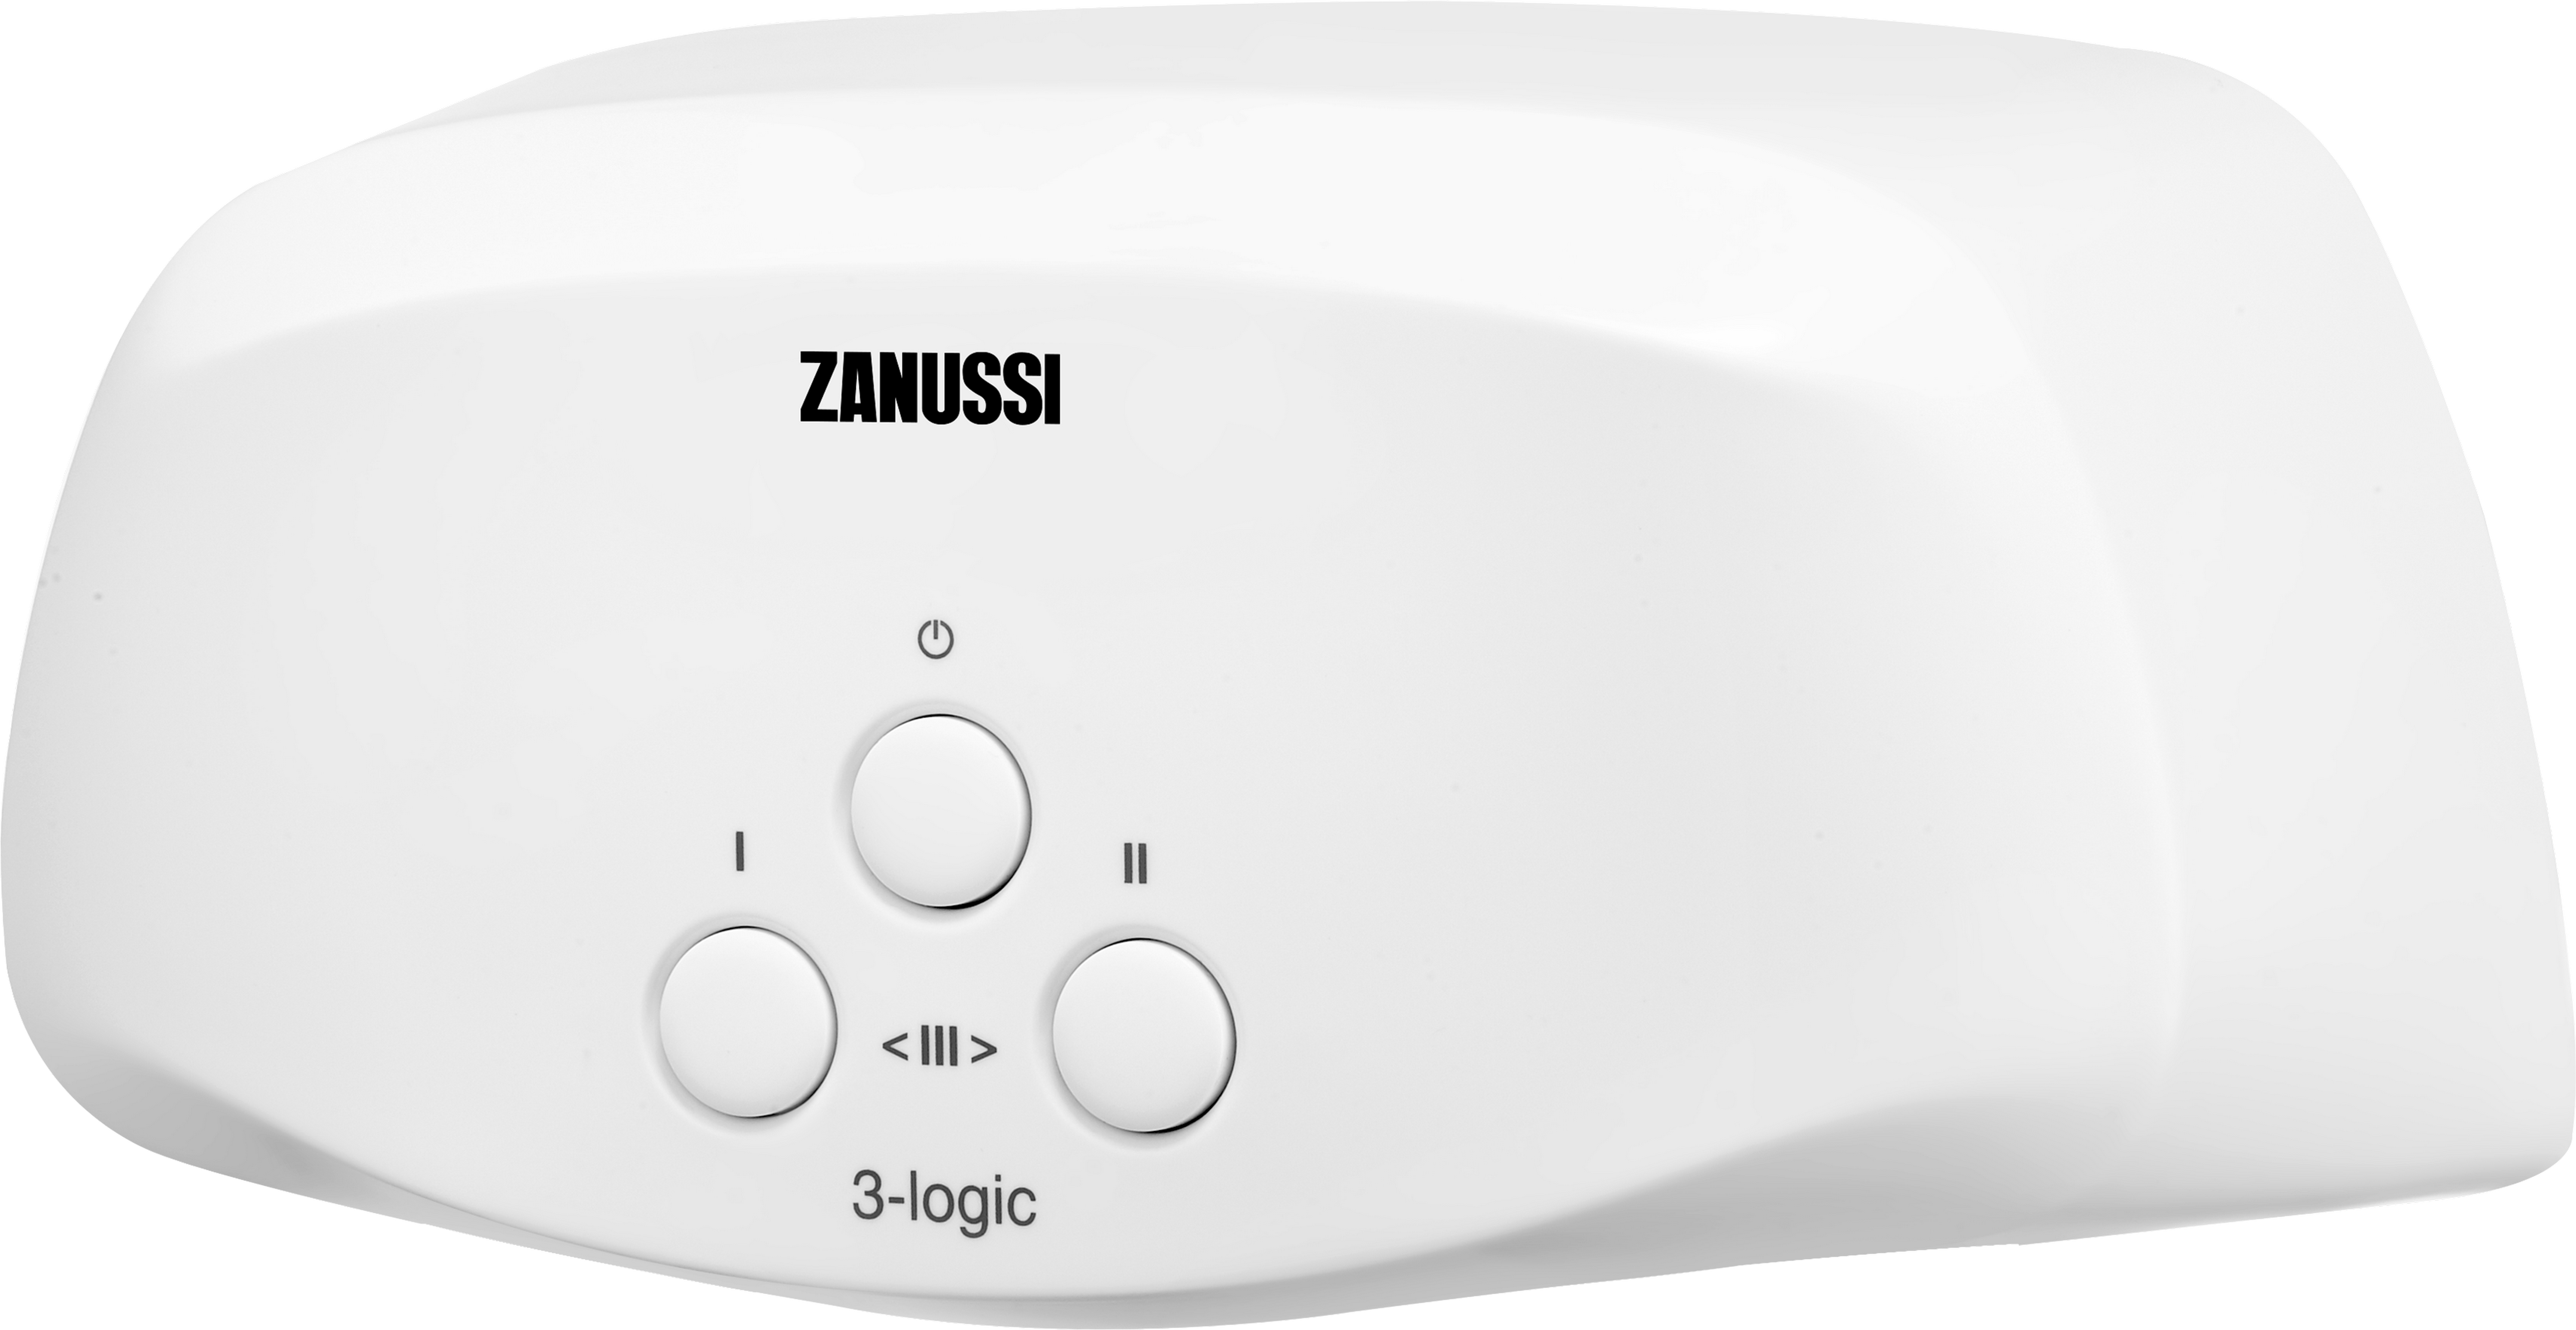 Проточный водонагреватель Zanussi 3-logic TS (3,5 кВт) цена 0.00 грн - фотография 2